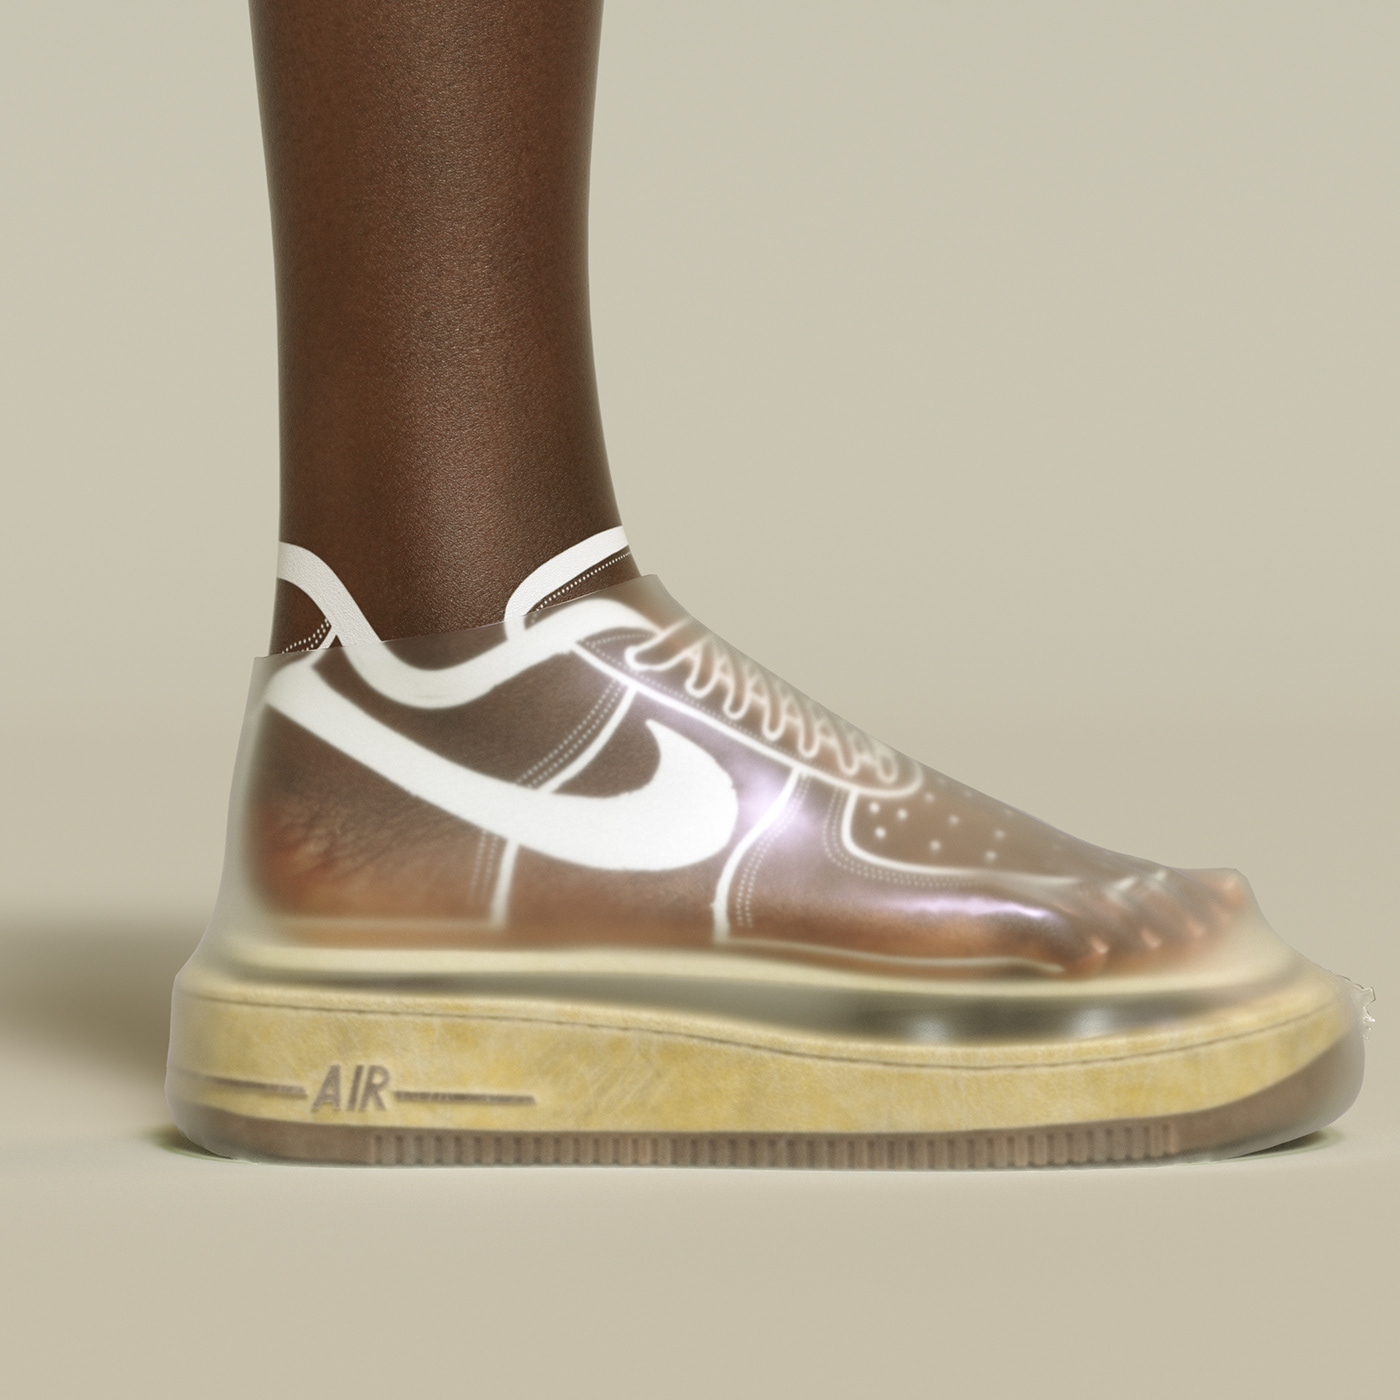 adidas art Nike puma shoes sneakers